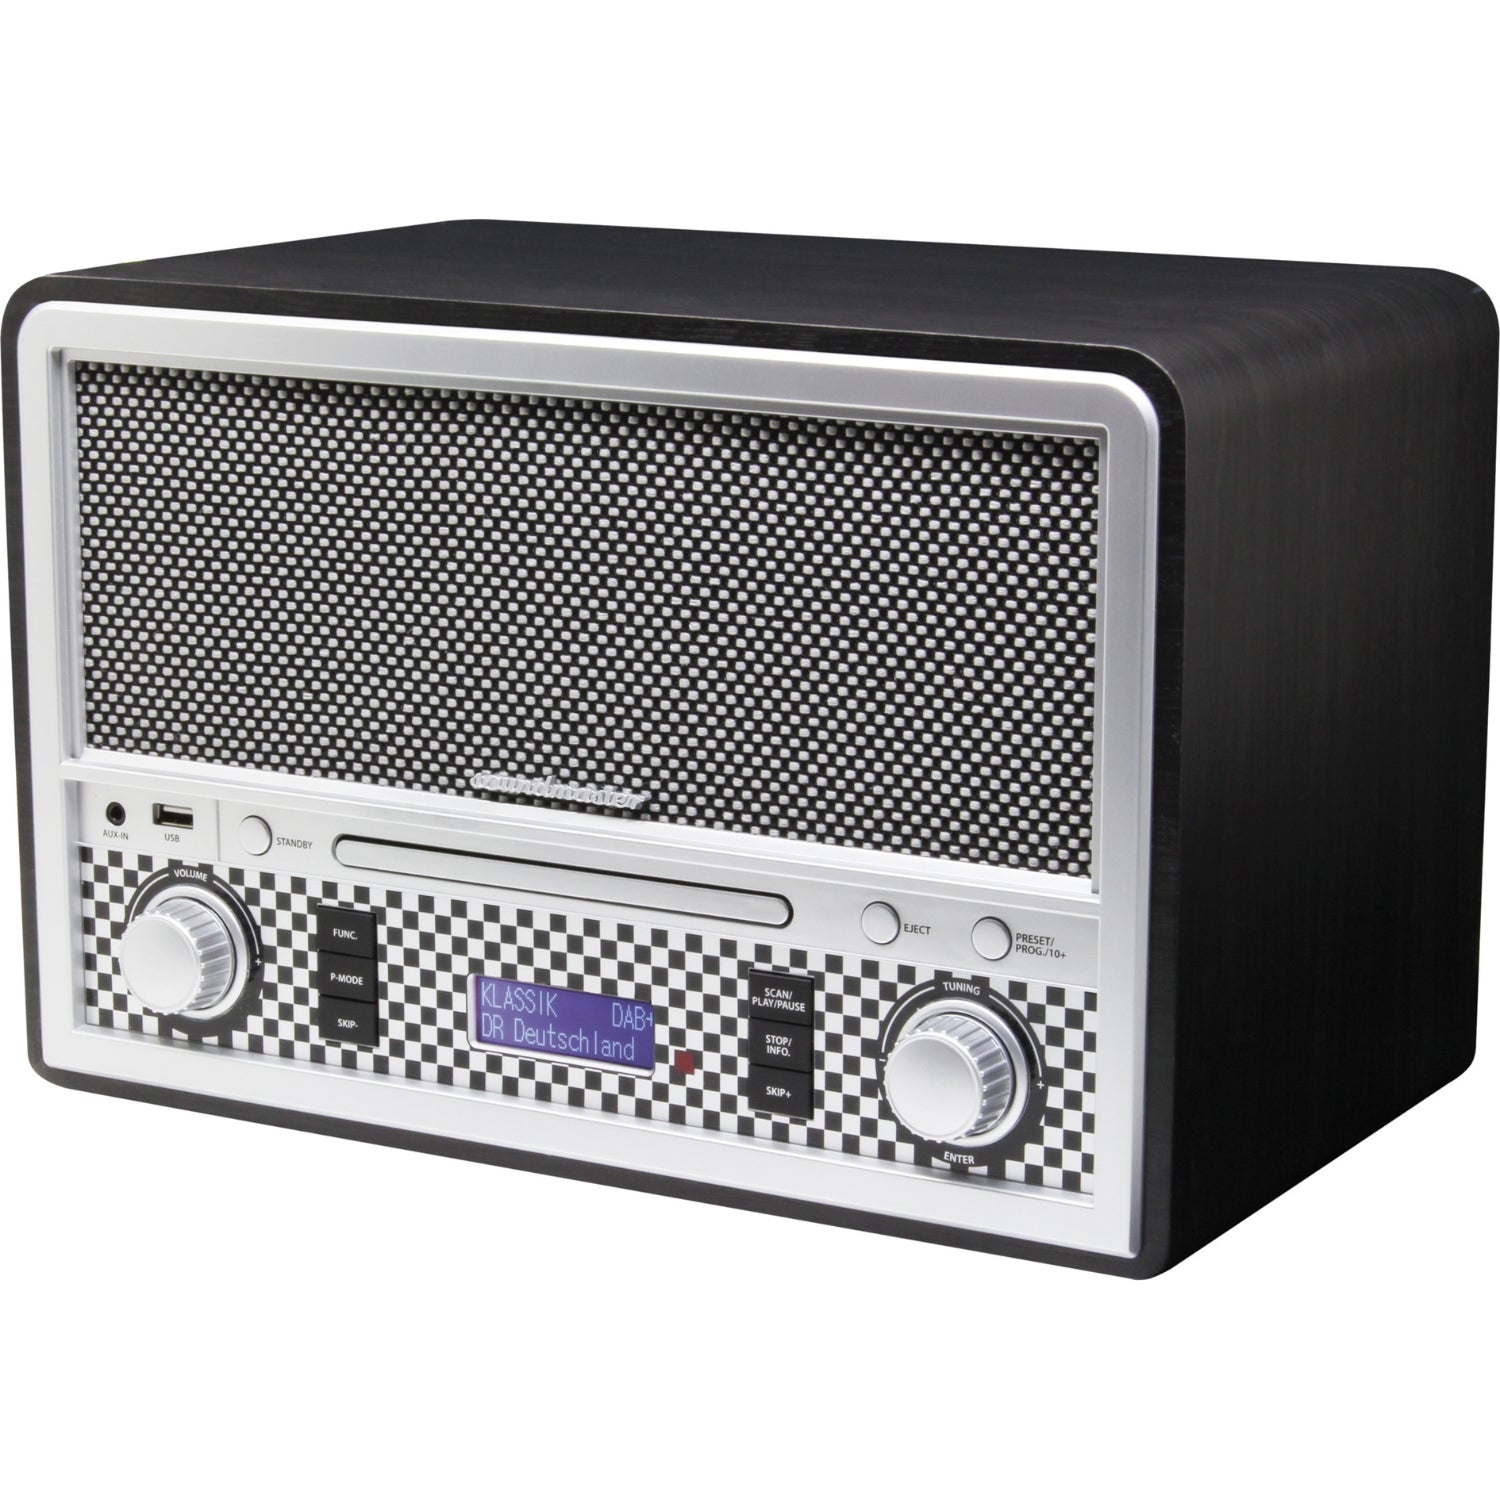 Soundmaster HighLine NR955SW Système compact rétro nostalgique Radio DAB + FM Radio USB Lecteur CD MP3 Bluetooth